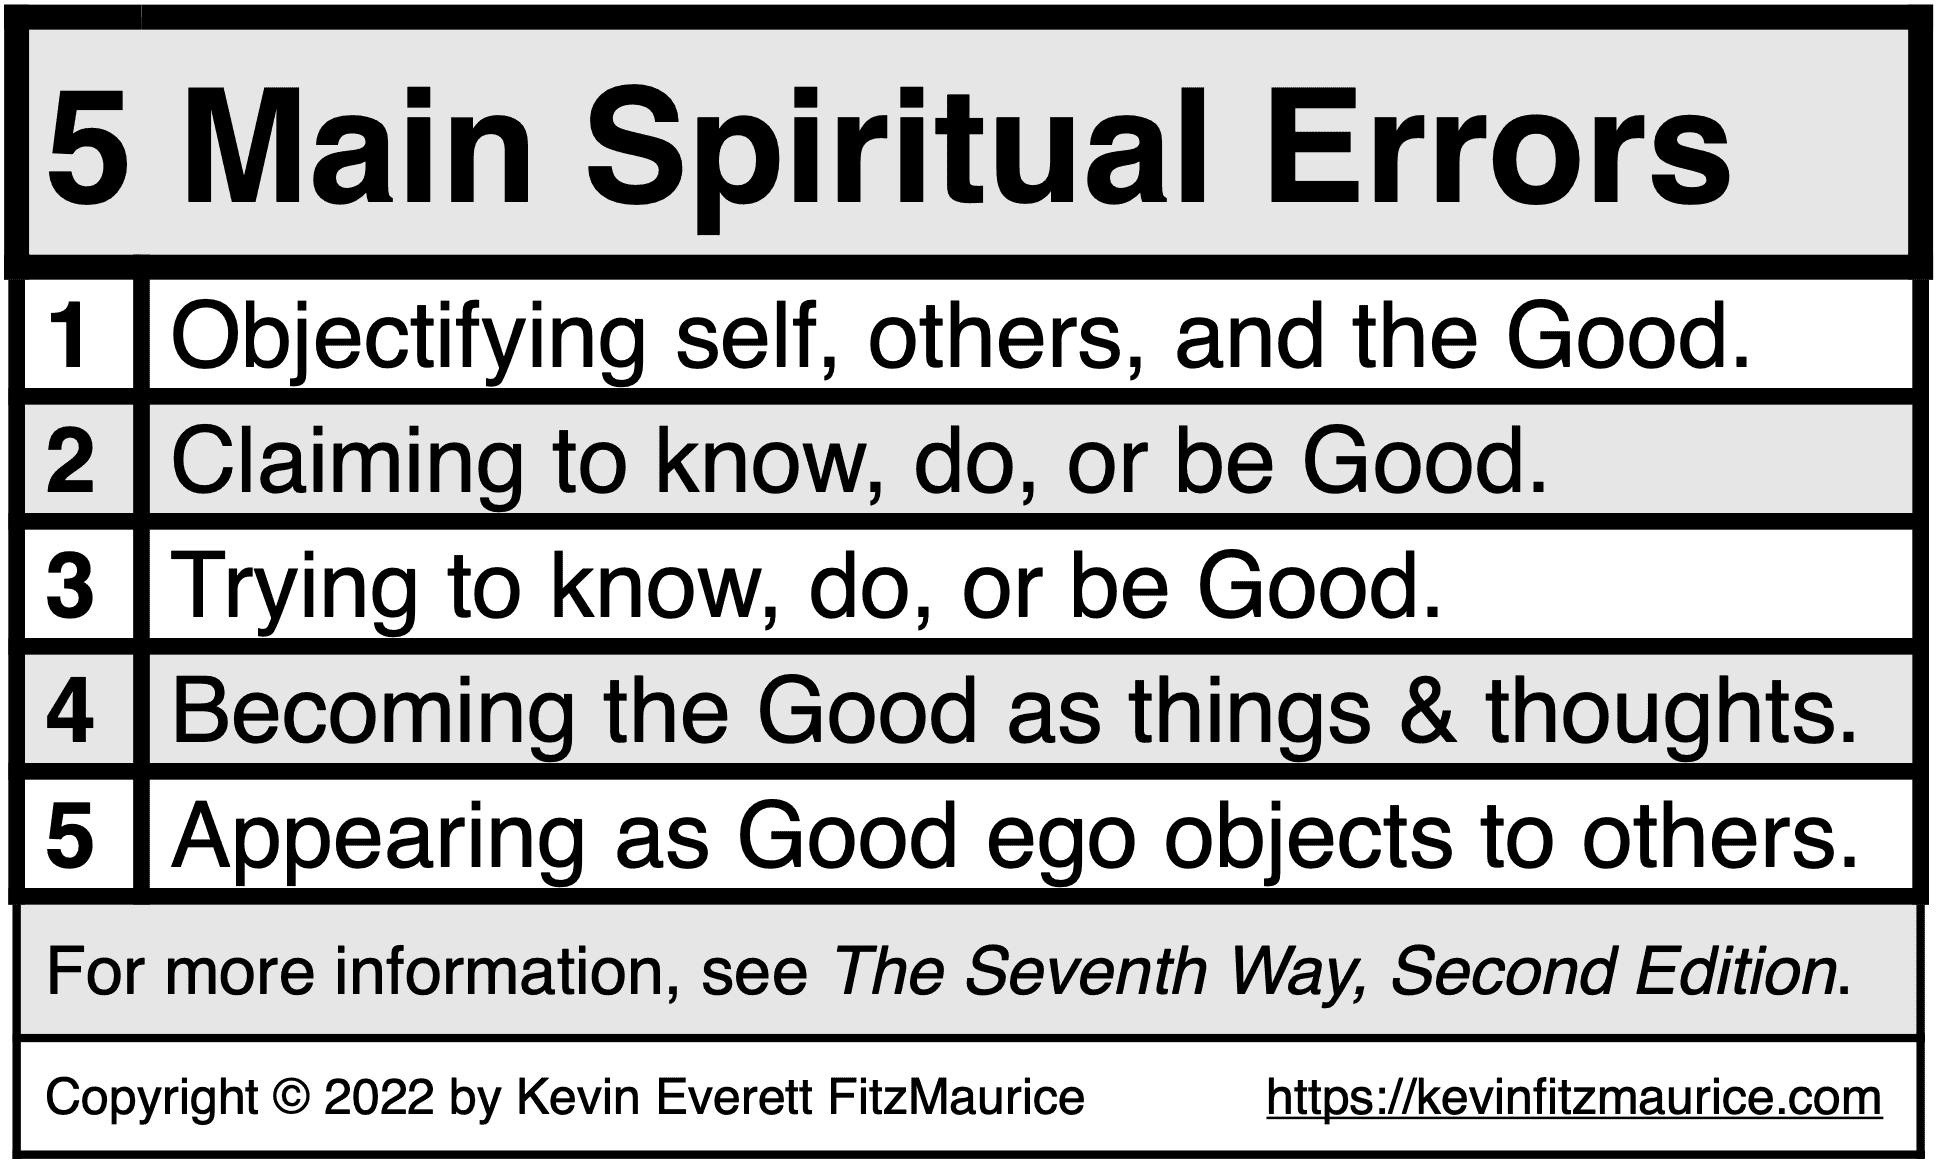 5 Main Spiritual Errors